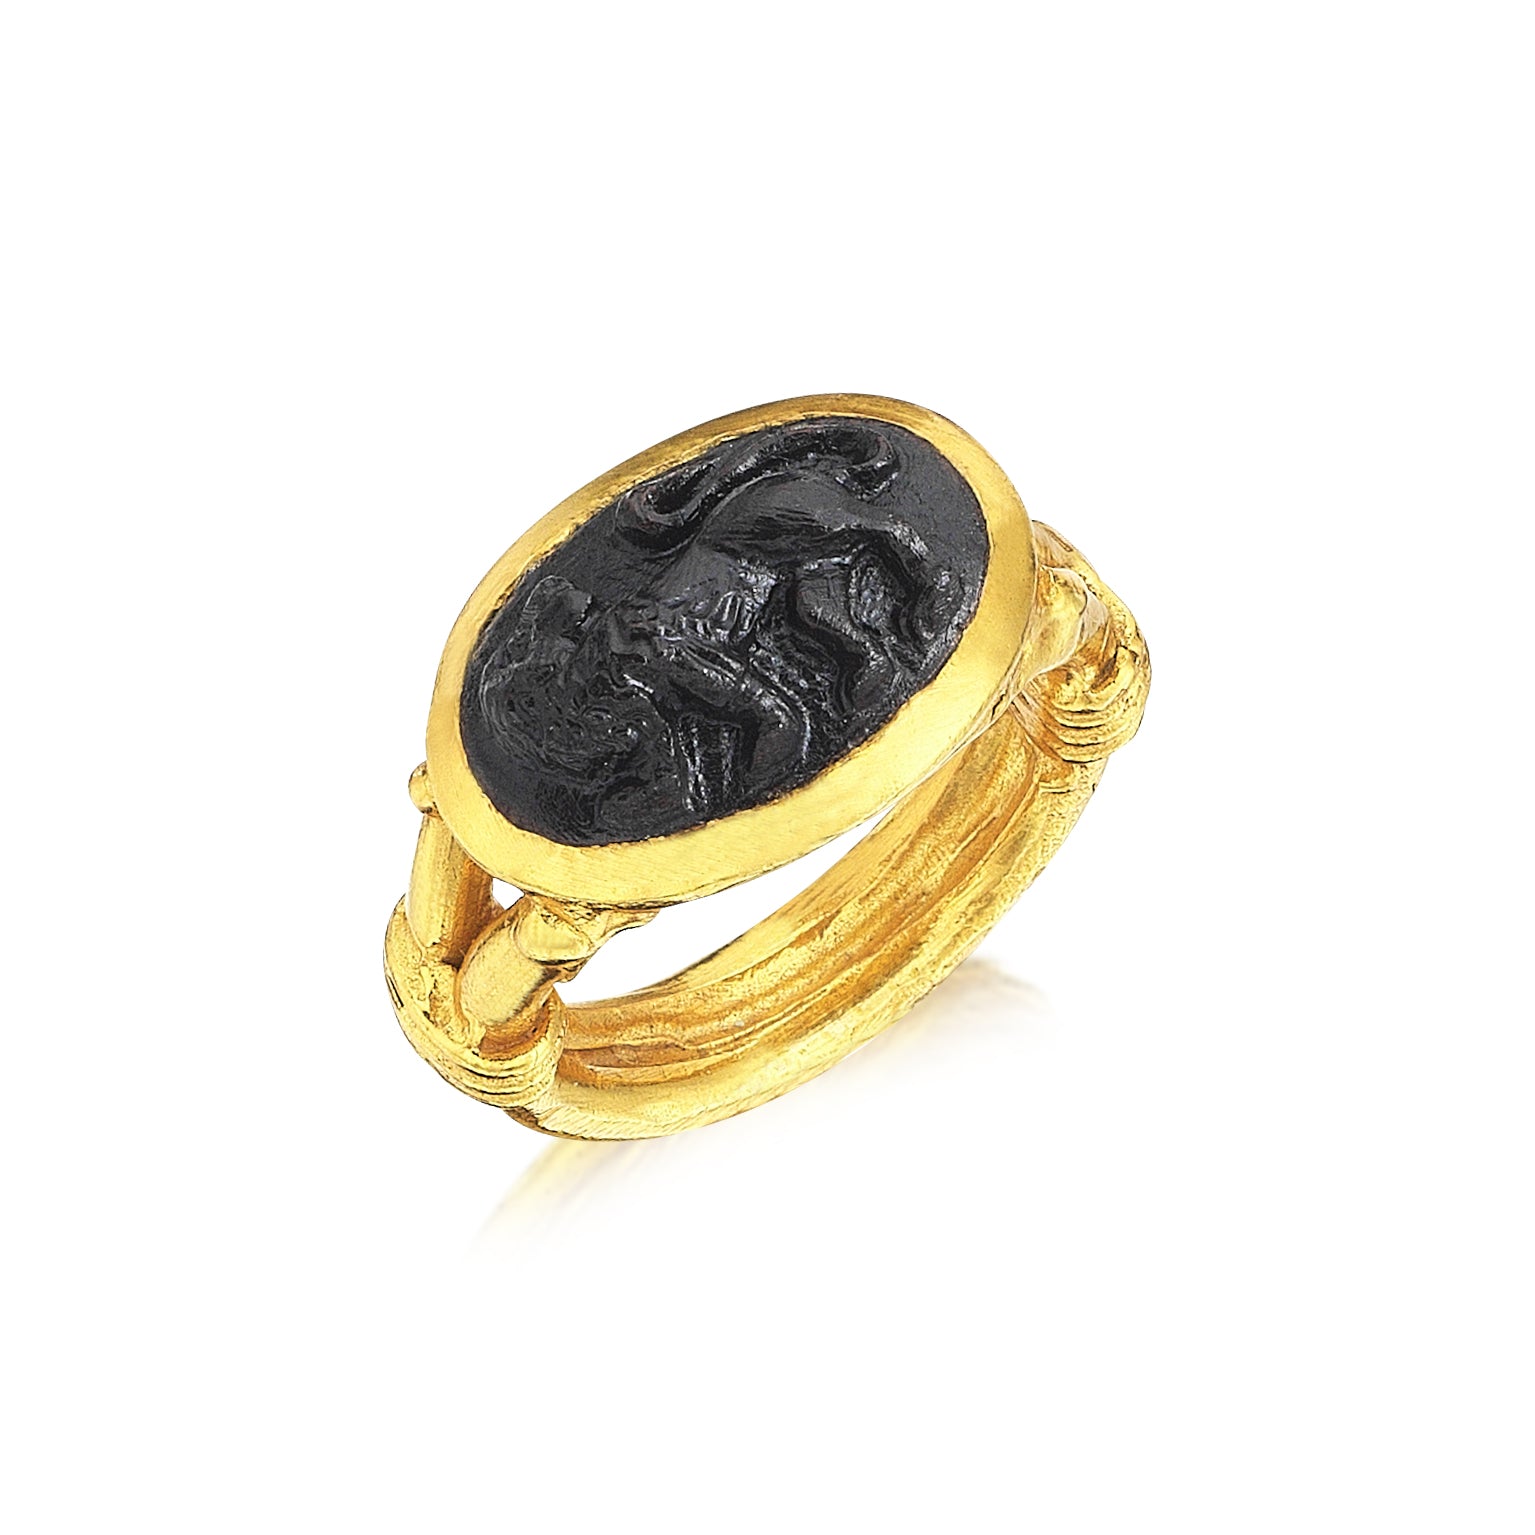 The Black Lion Ring